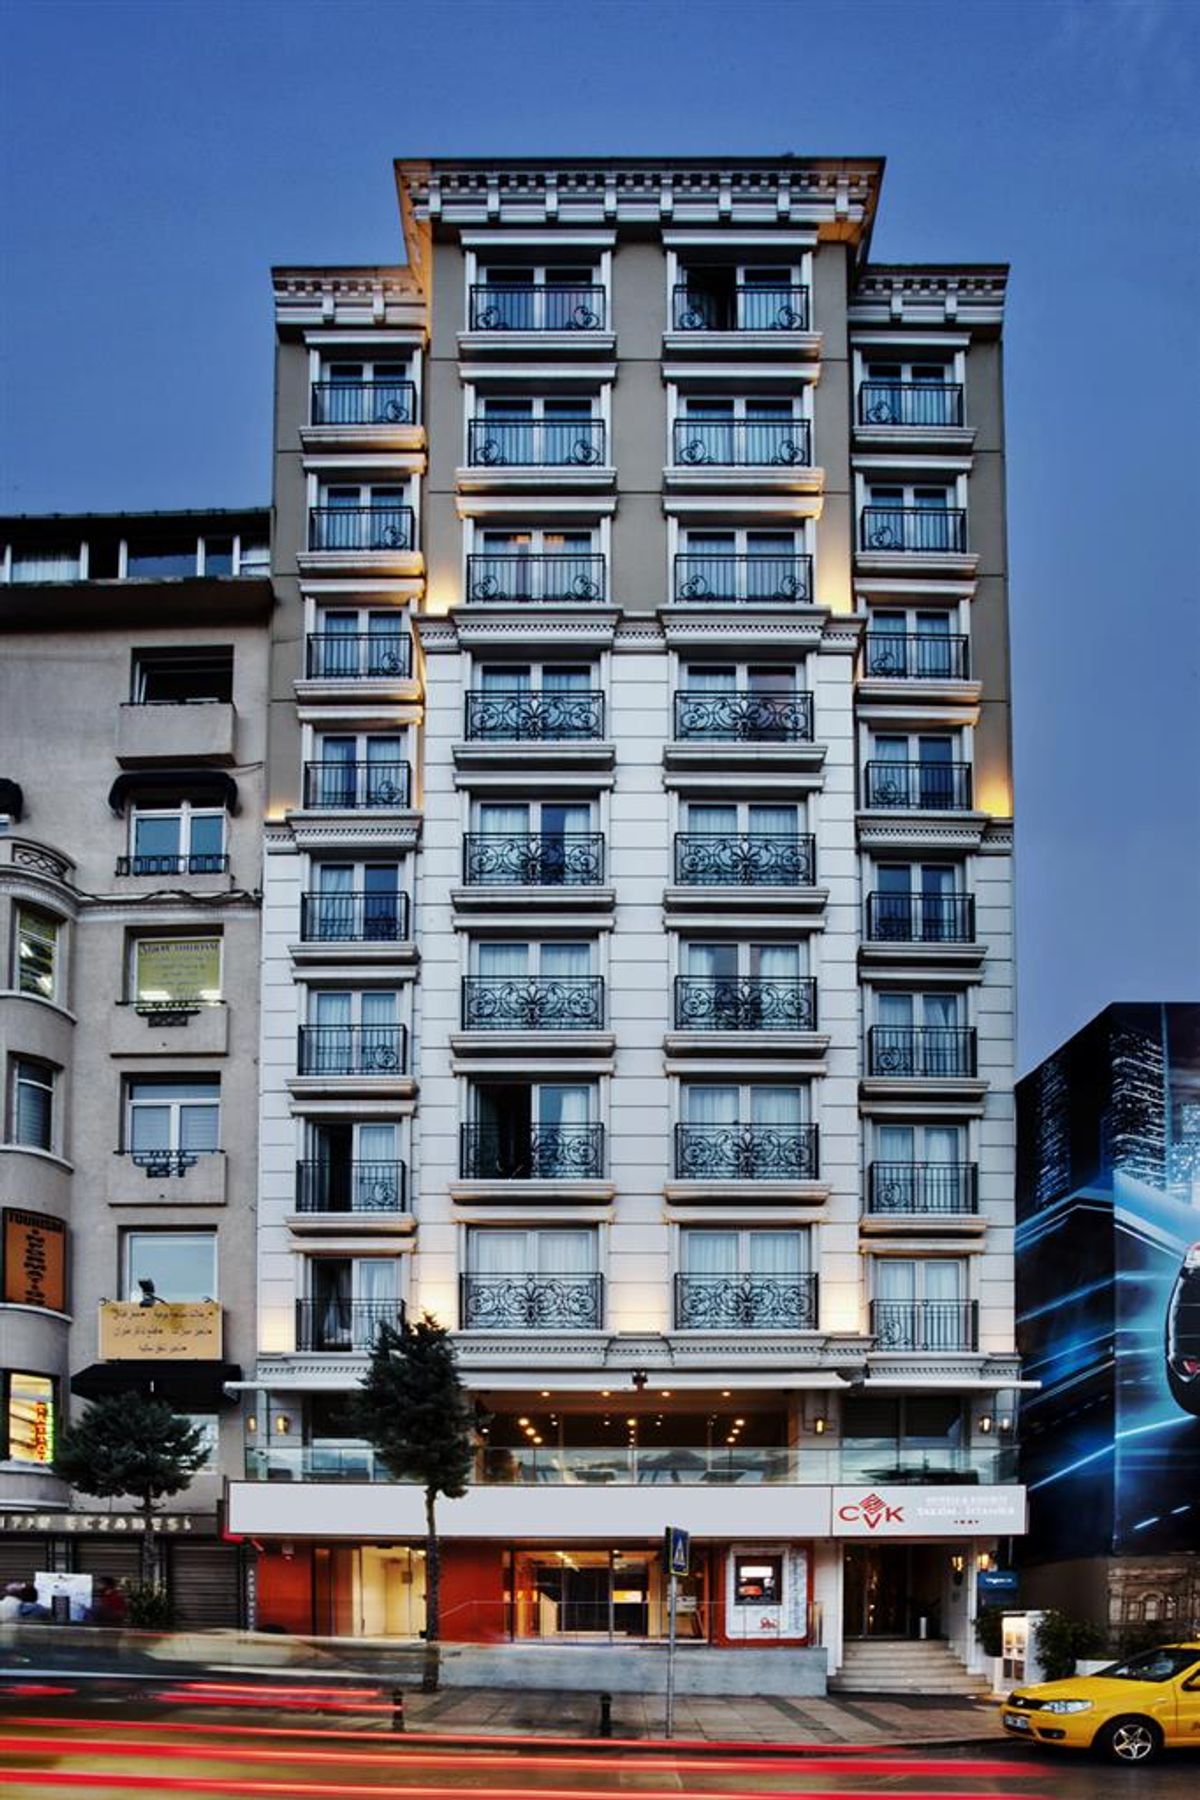 cvk-hotels-taksim-images-videos-first-class-istanbul-turkey-hotels